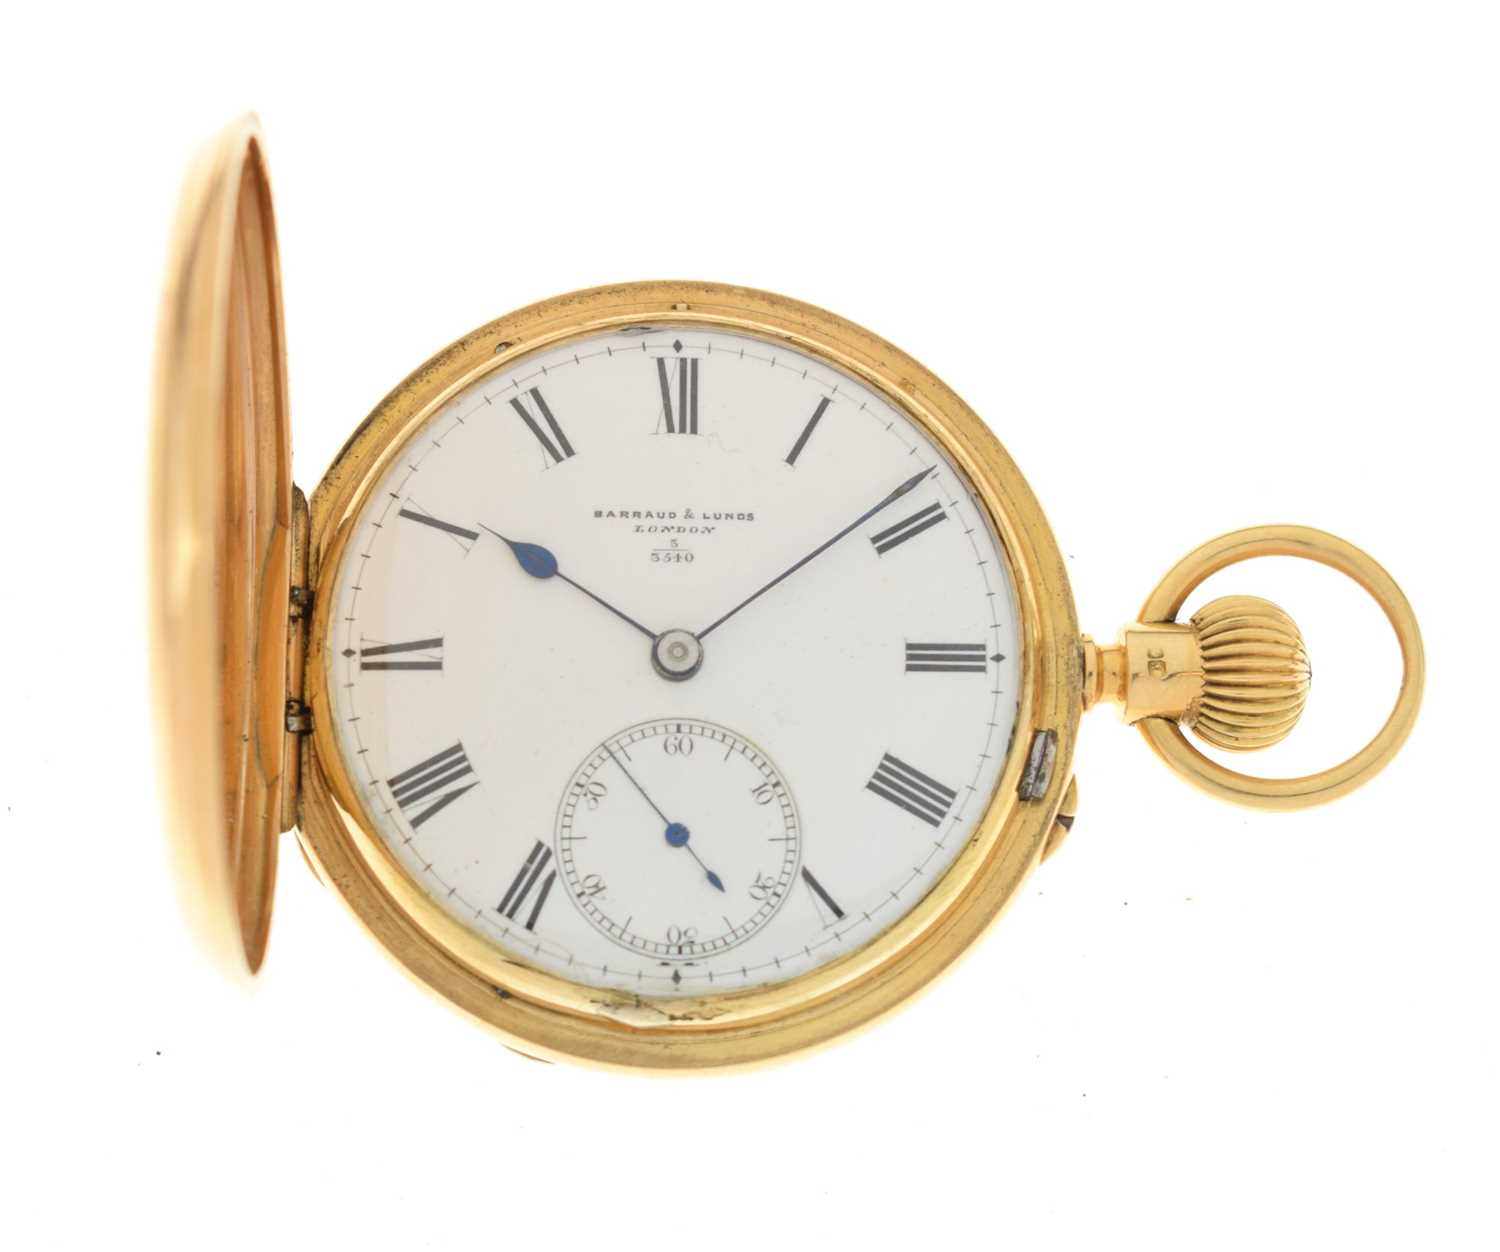 Barraud & Lunds, London - 18ct gold hunter pocket watch